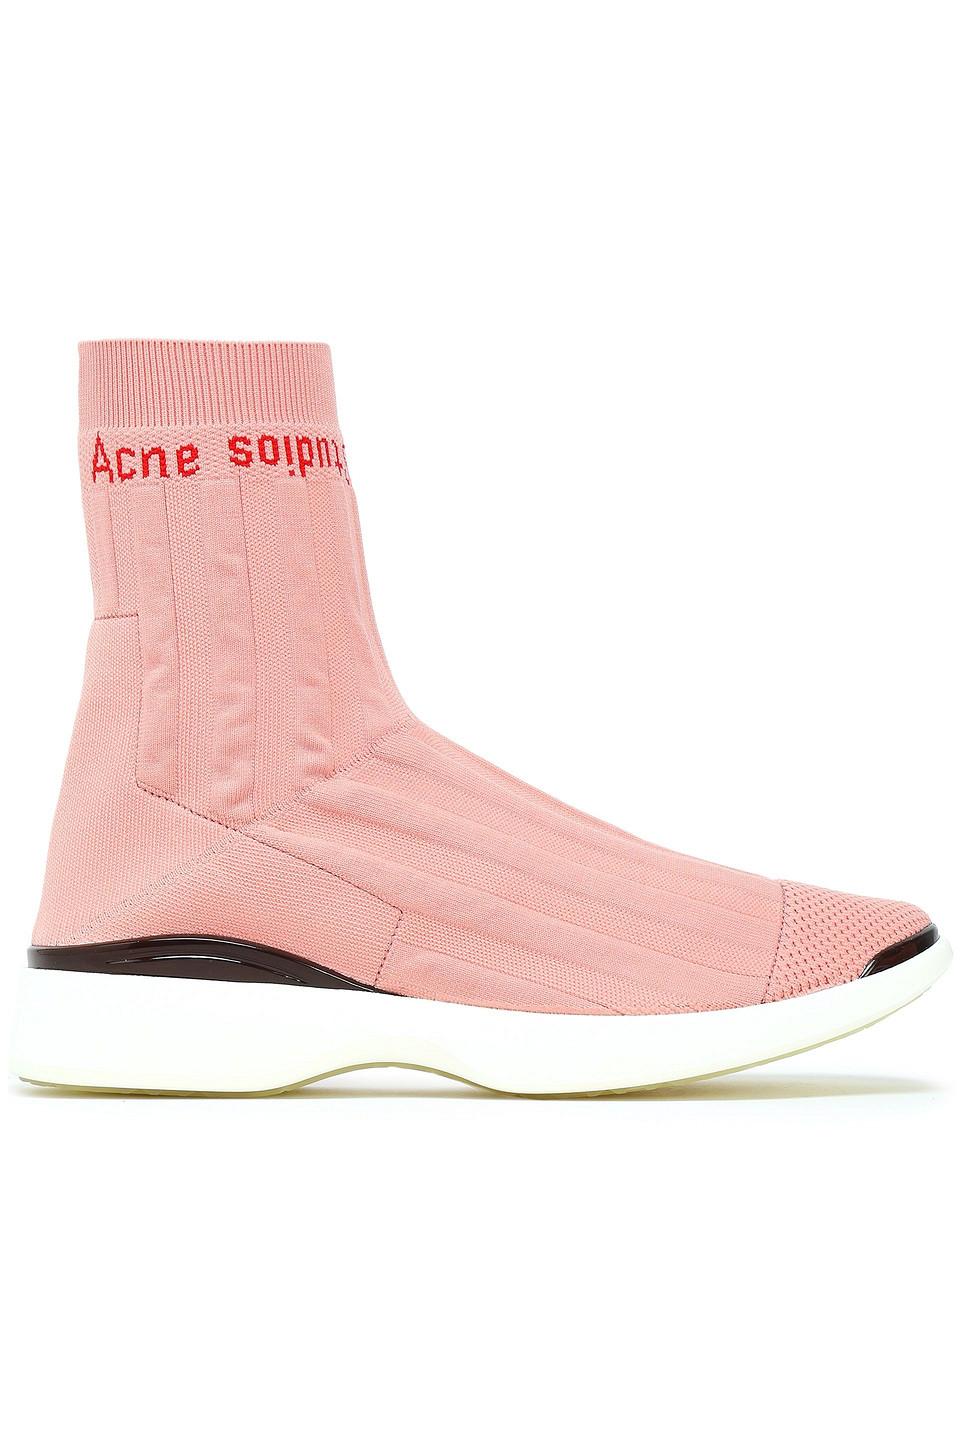 Acne Studios Batilda Mesh-trimmed Stretch-knit Sneakers in Pink | Lyst